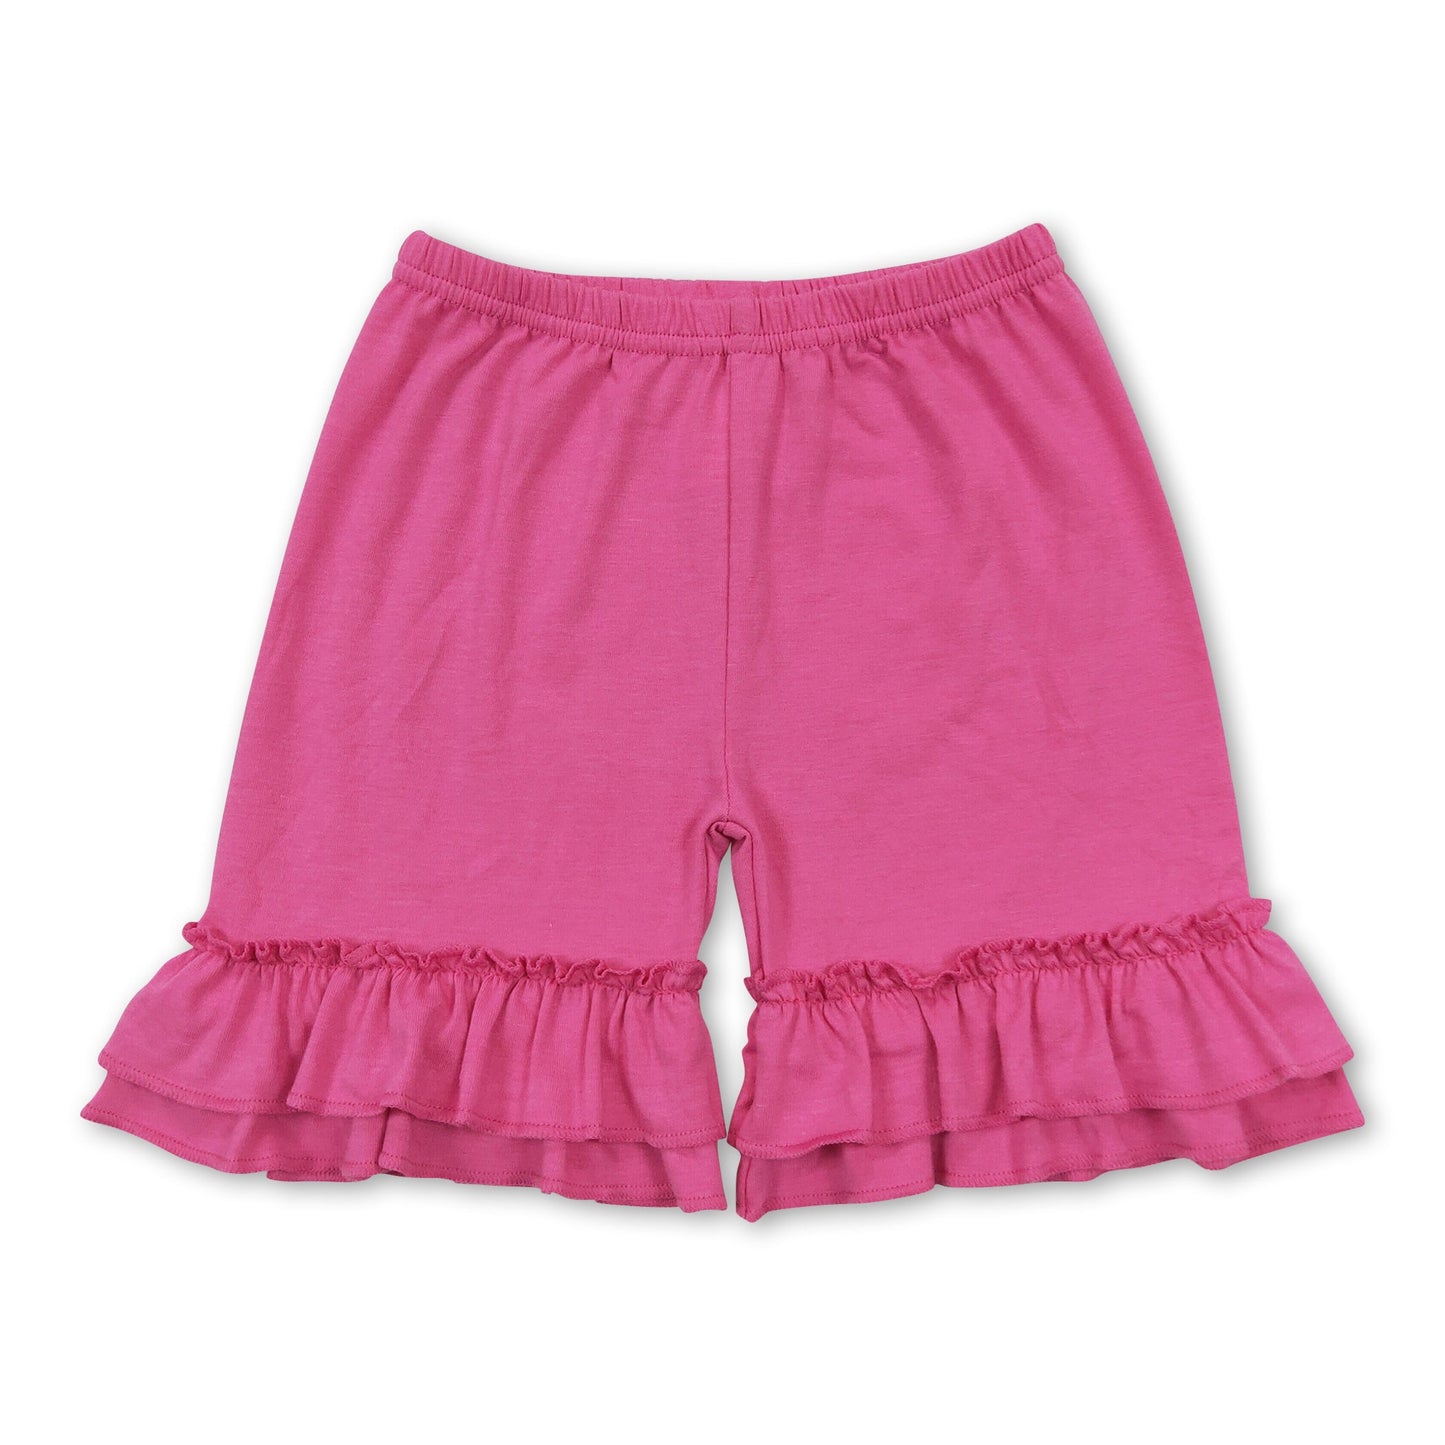 Hot pink ruffle cotton girls summer shorts